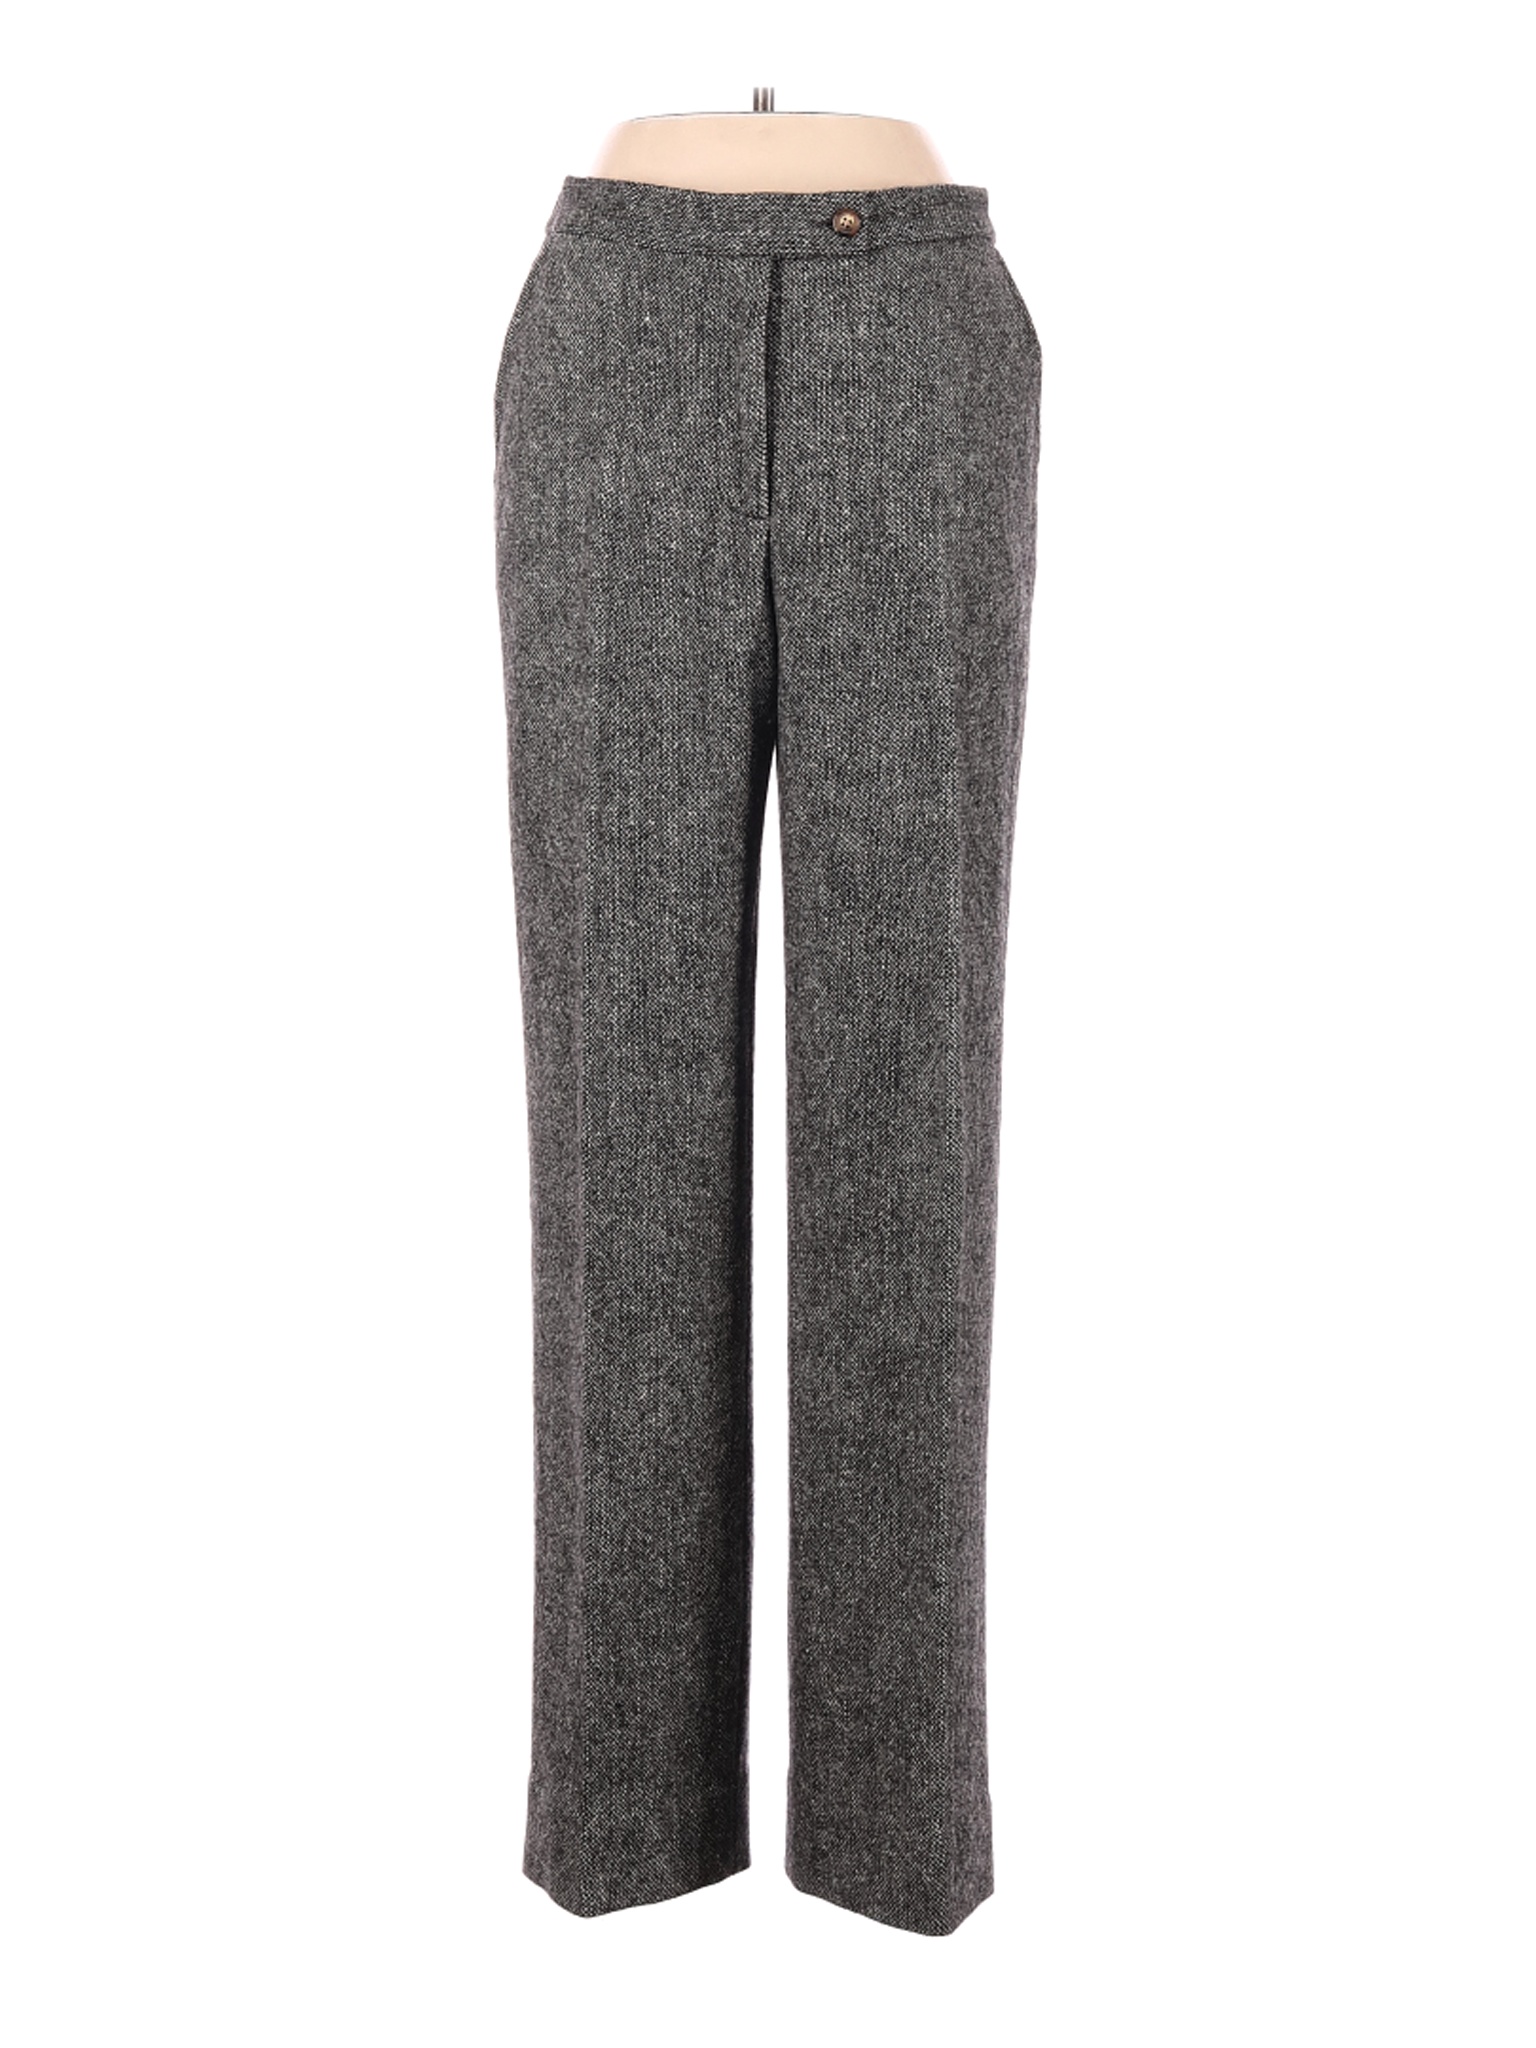 NWT Orvis Women Gray Wool Pants 4 Petites | eBay